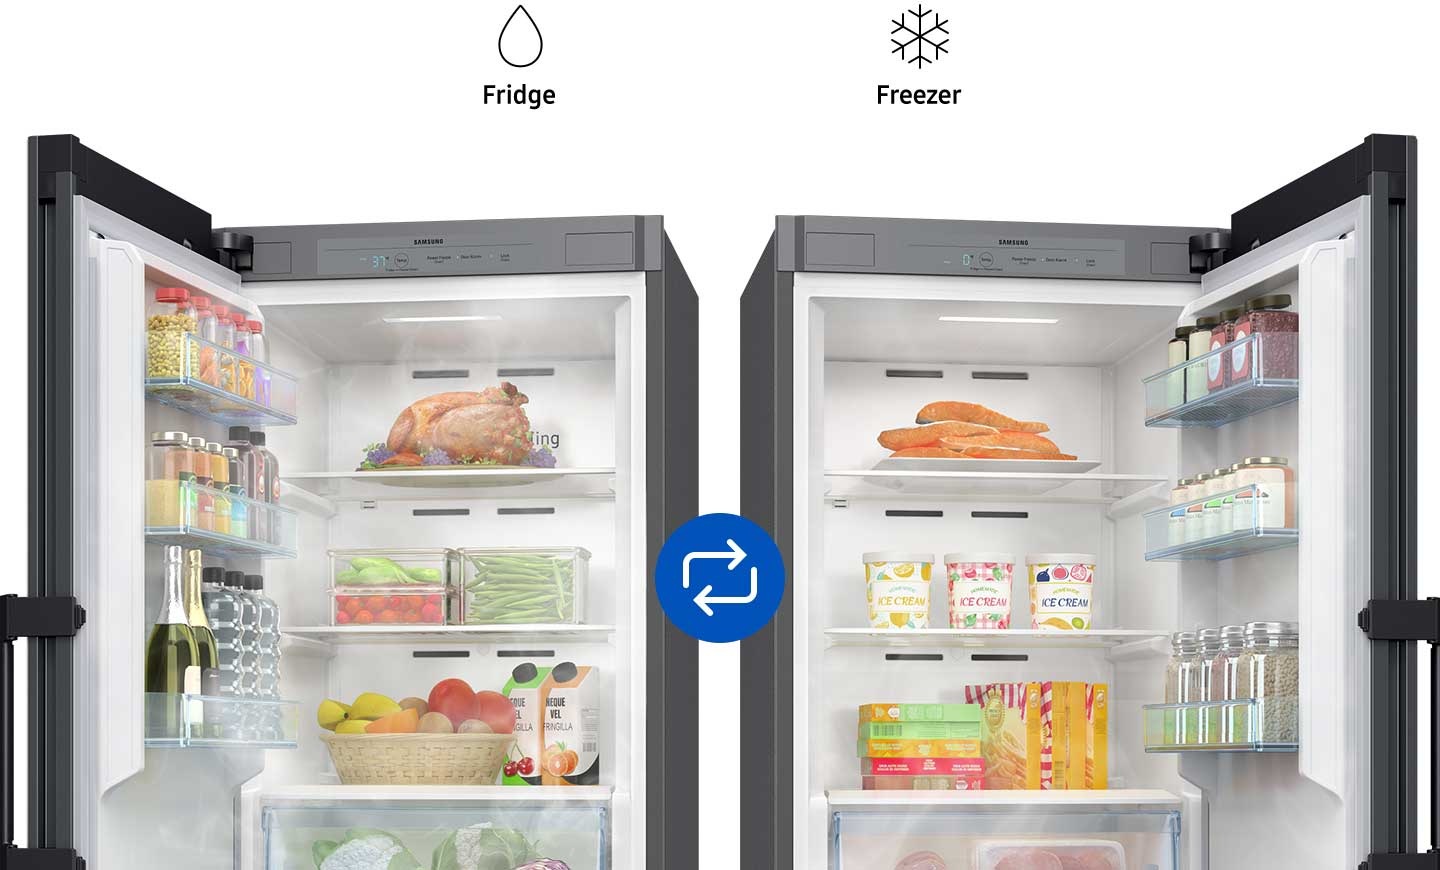 Temperature ranges are fridge mode 1~7℃(34~44℉) and freezer mode -23~-15℃(-8~5℉).